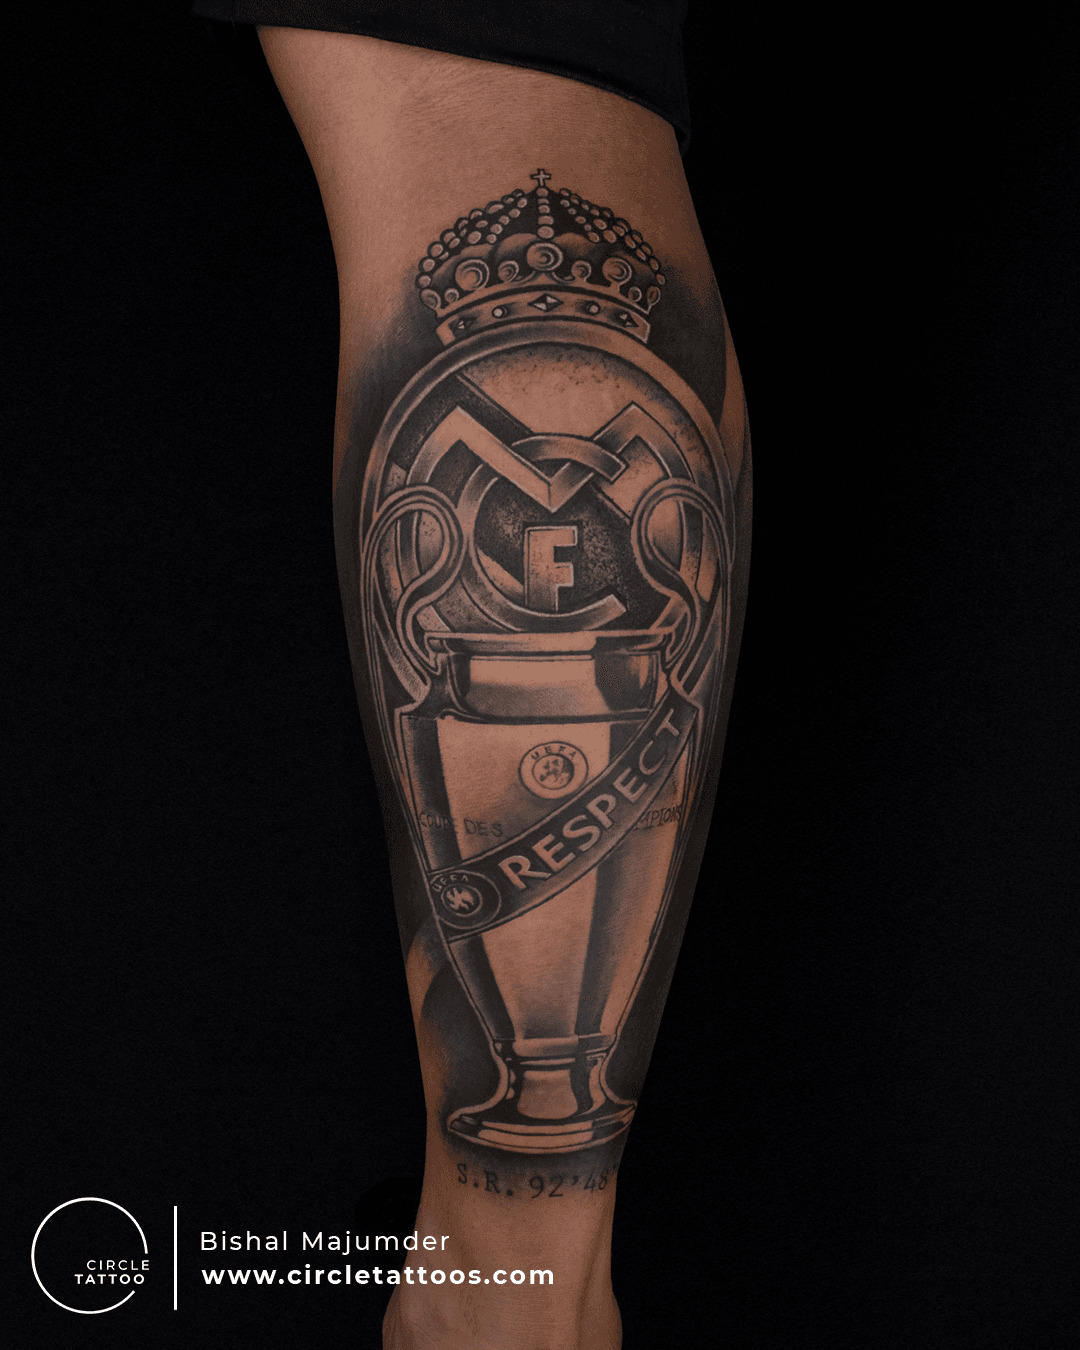 60 Real Madrid Tattoo Designs For Men  Soccer Ink Ideas